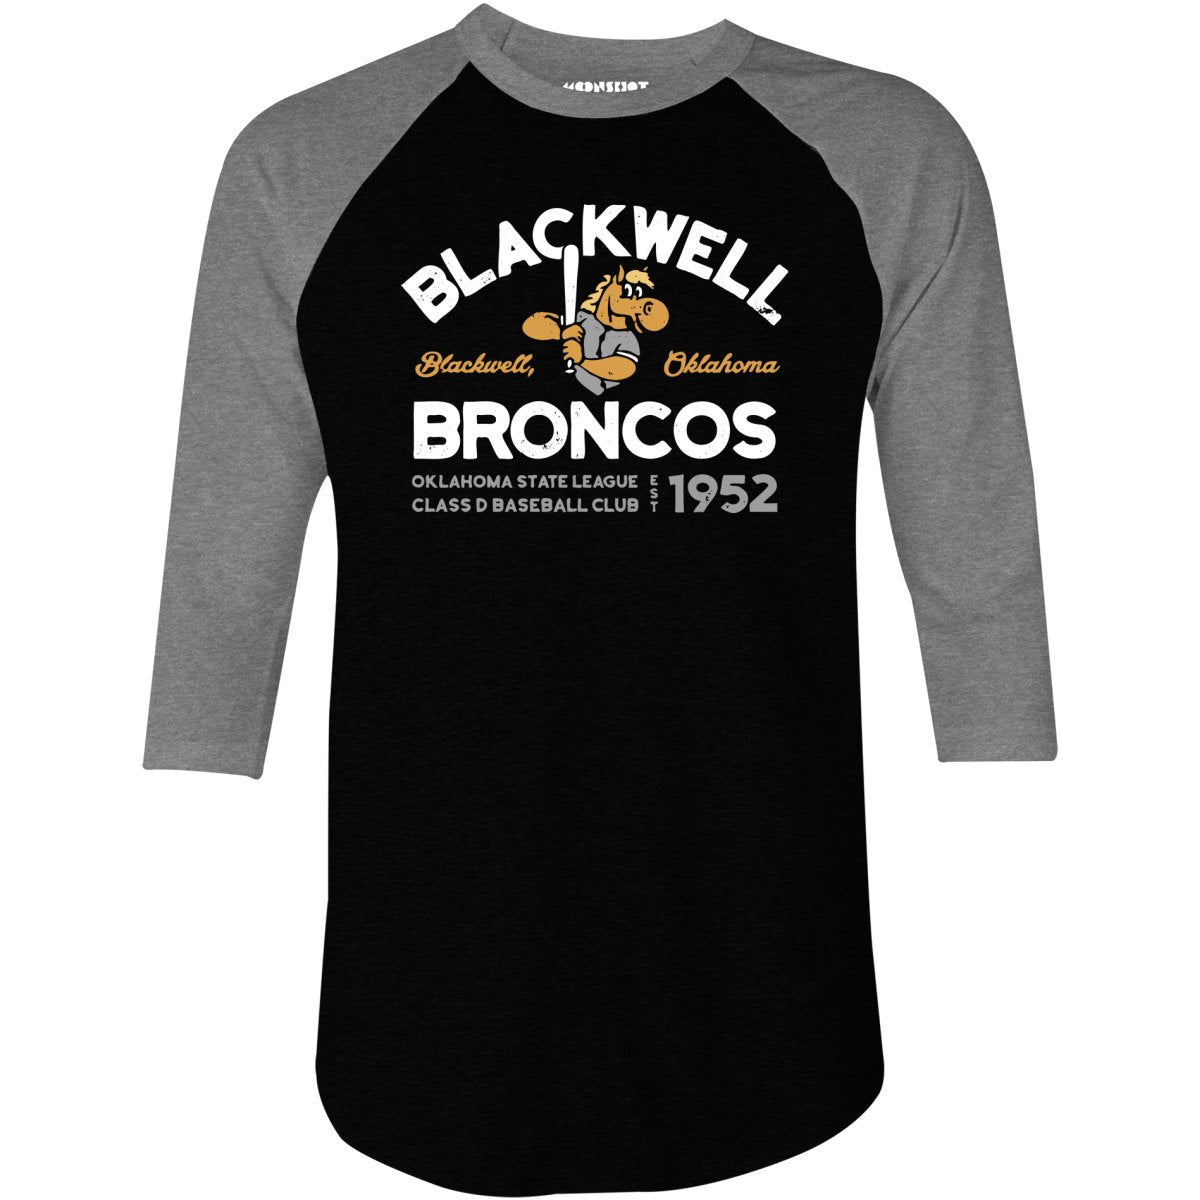 Blackwell Broncos - Oklahoma - Vintage Defunct Baseball Teams - 3/4 Sleeve Raglan T-Shirt